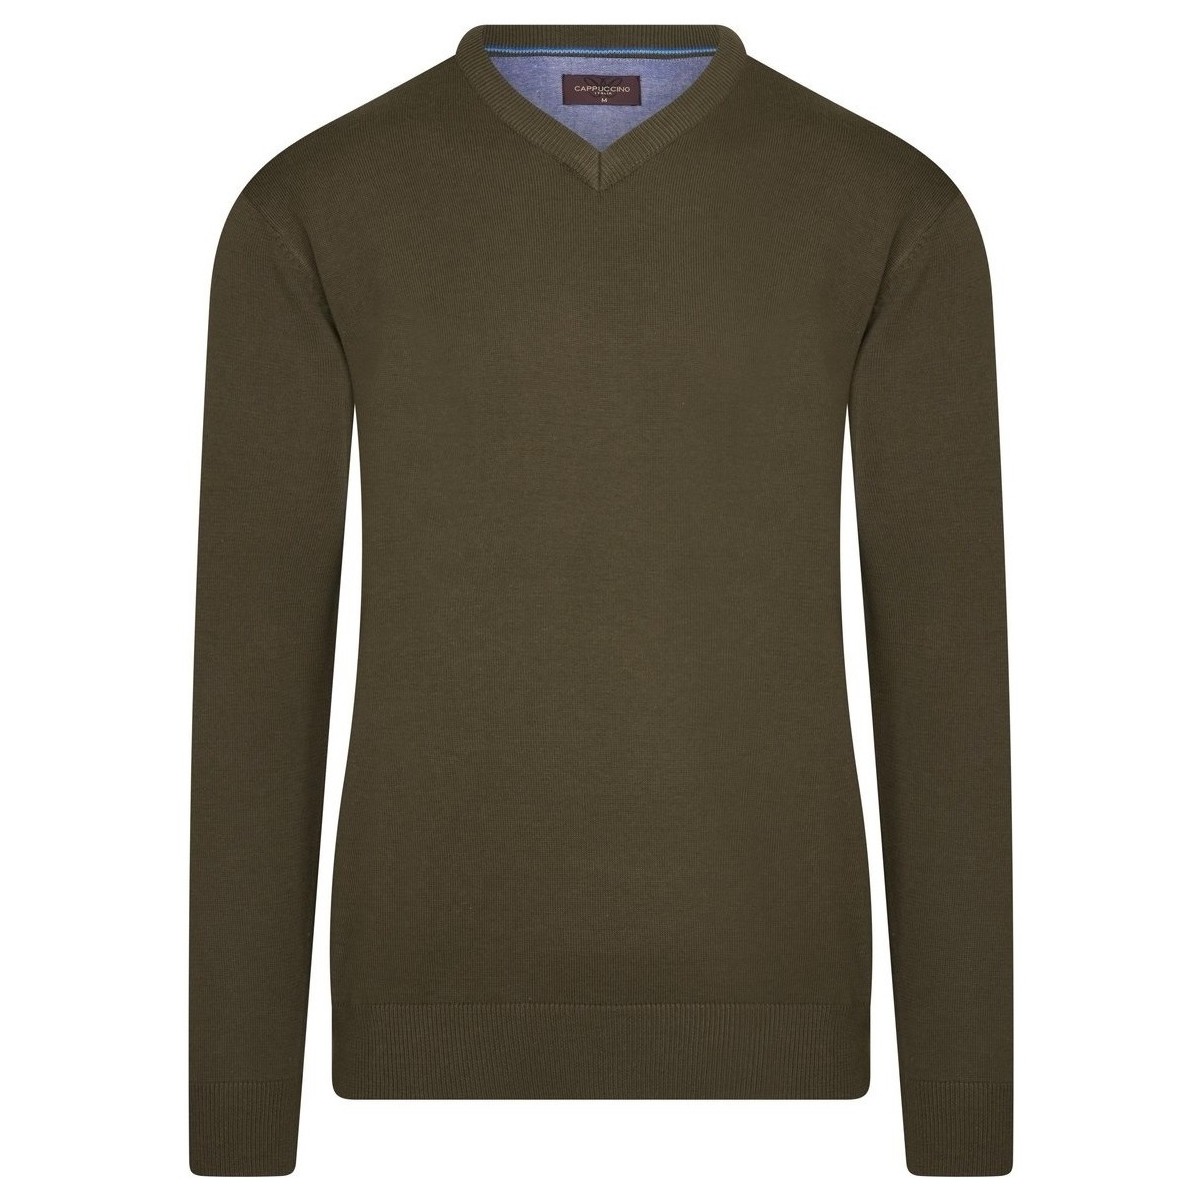 Kleidung Herren Sweatshirts Cappuccino Italia Pullover Army Grün